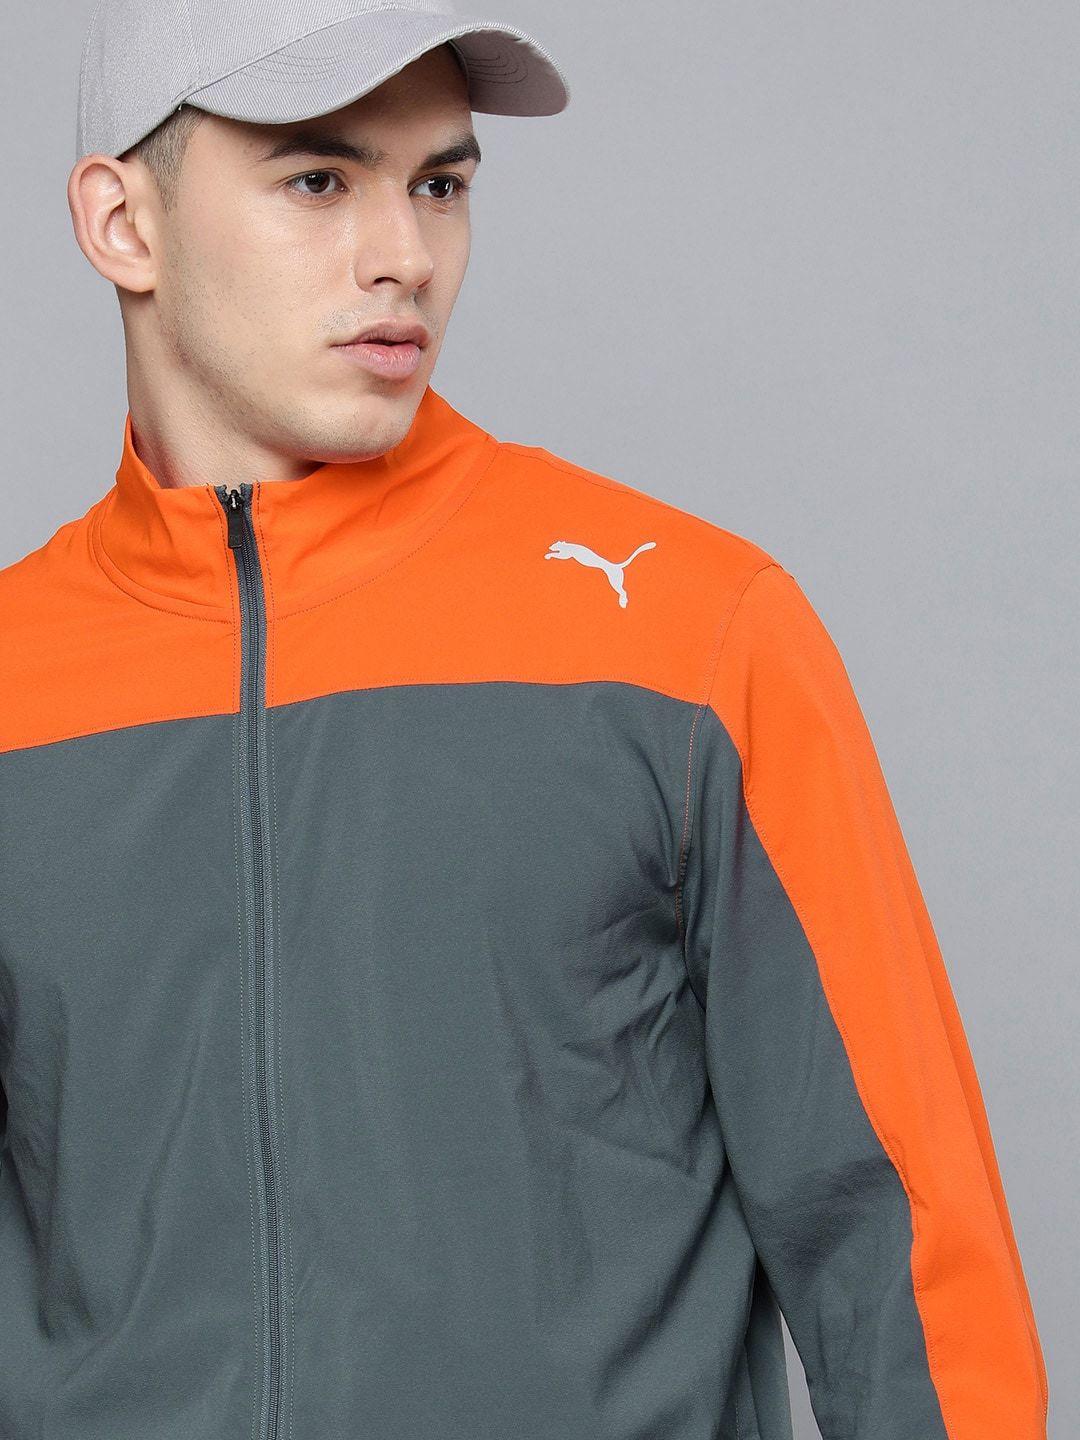 puma men orange& grey colourblocked high collared training sustainable track suit